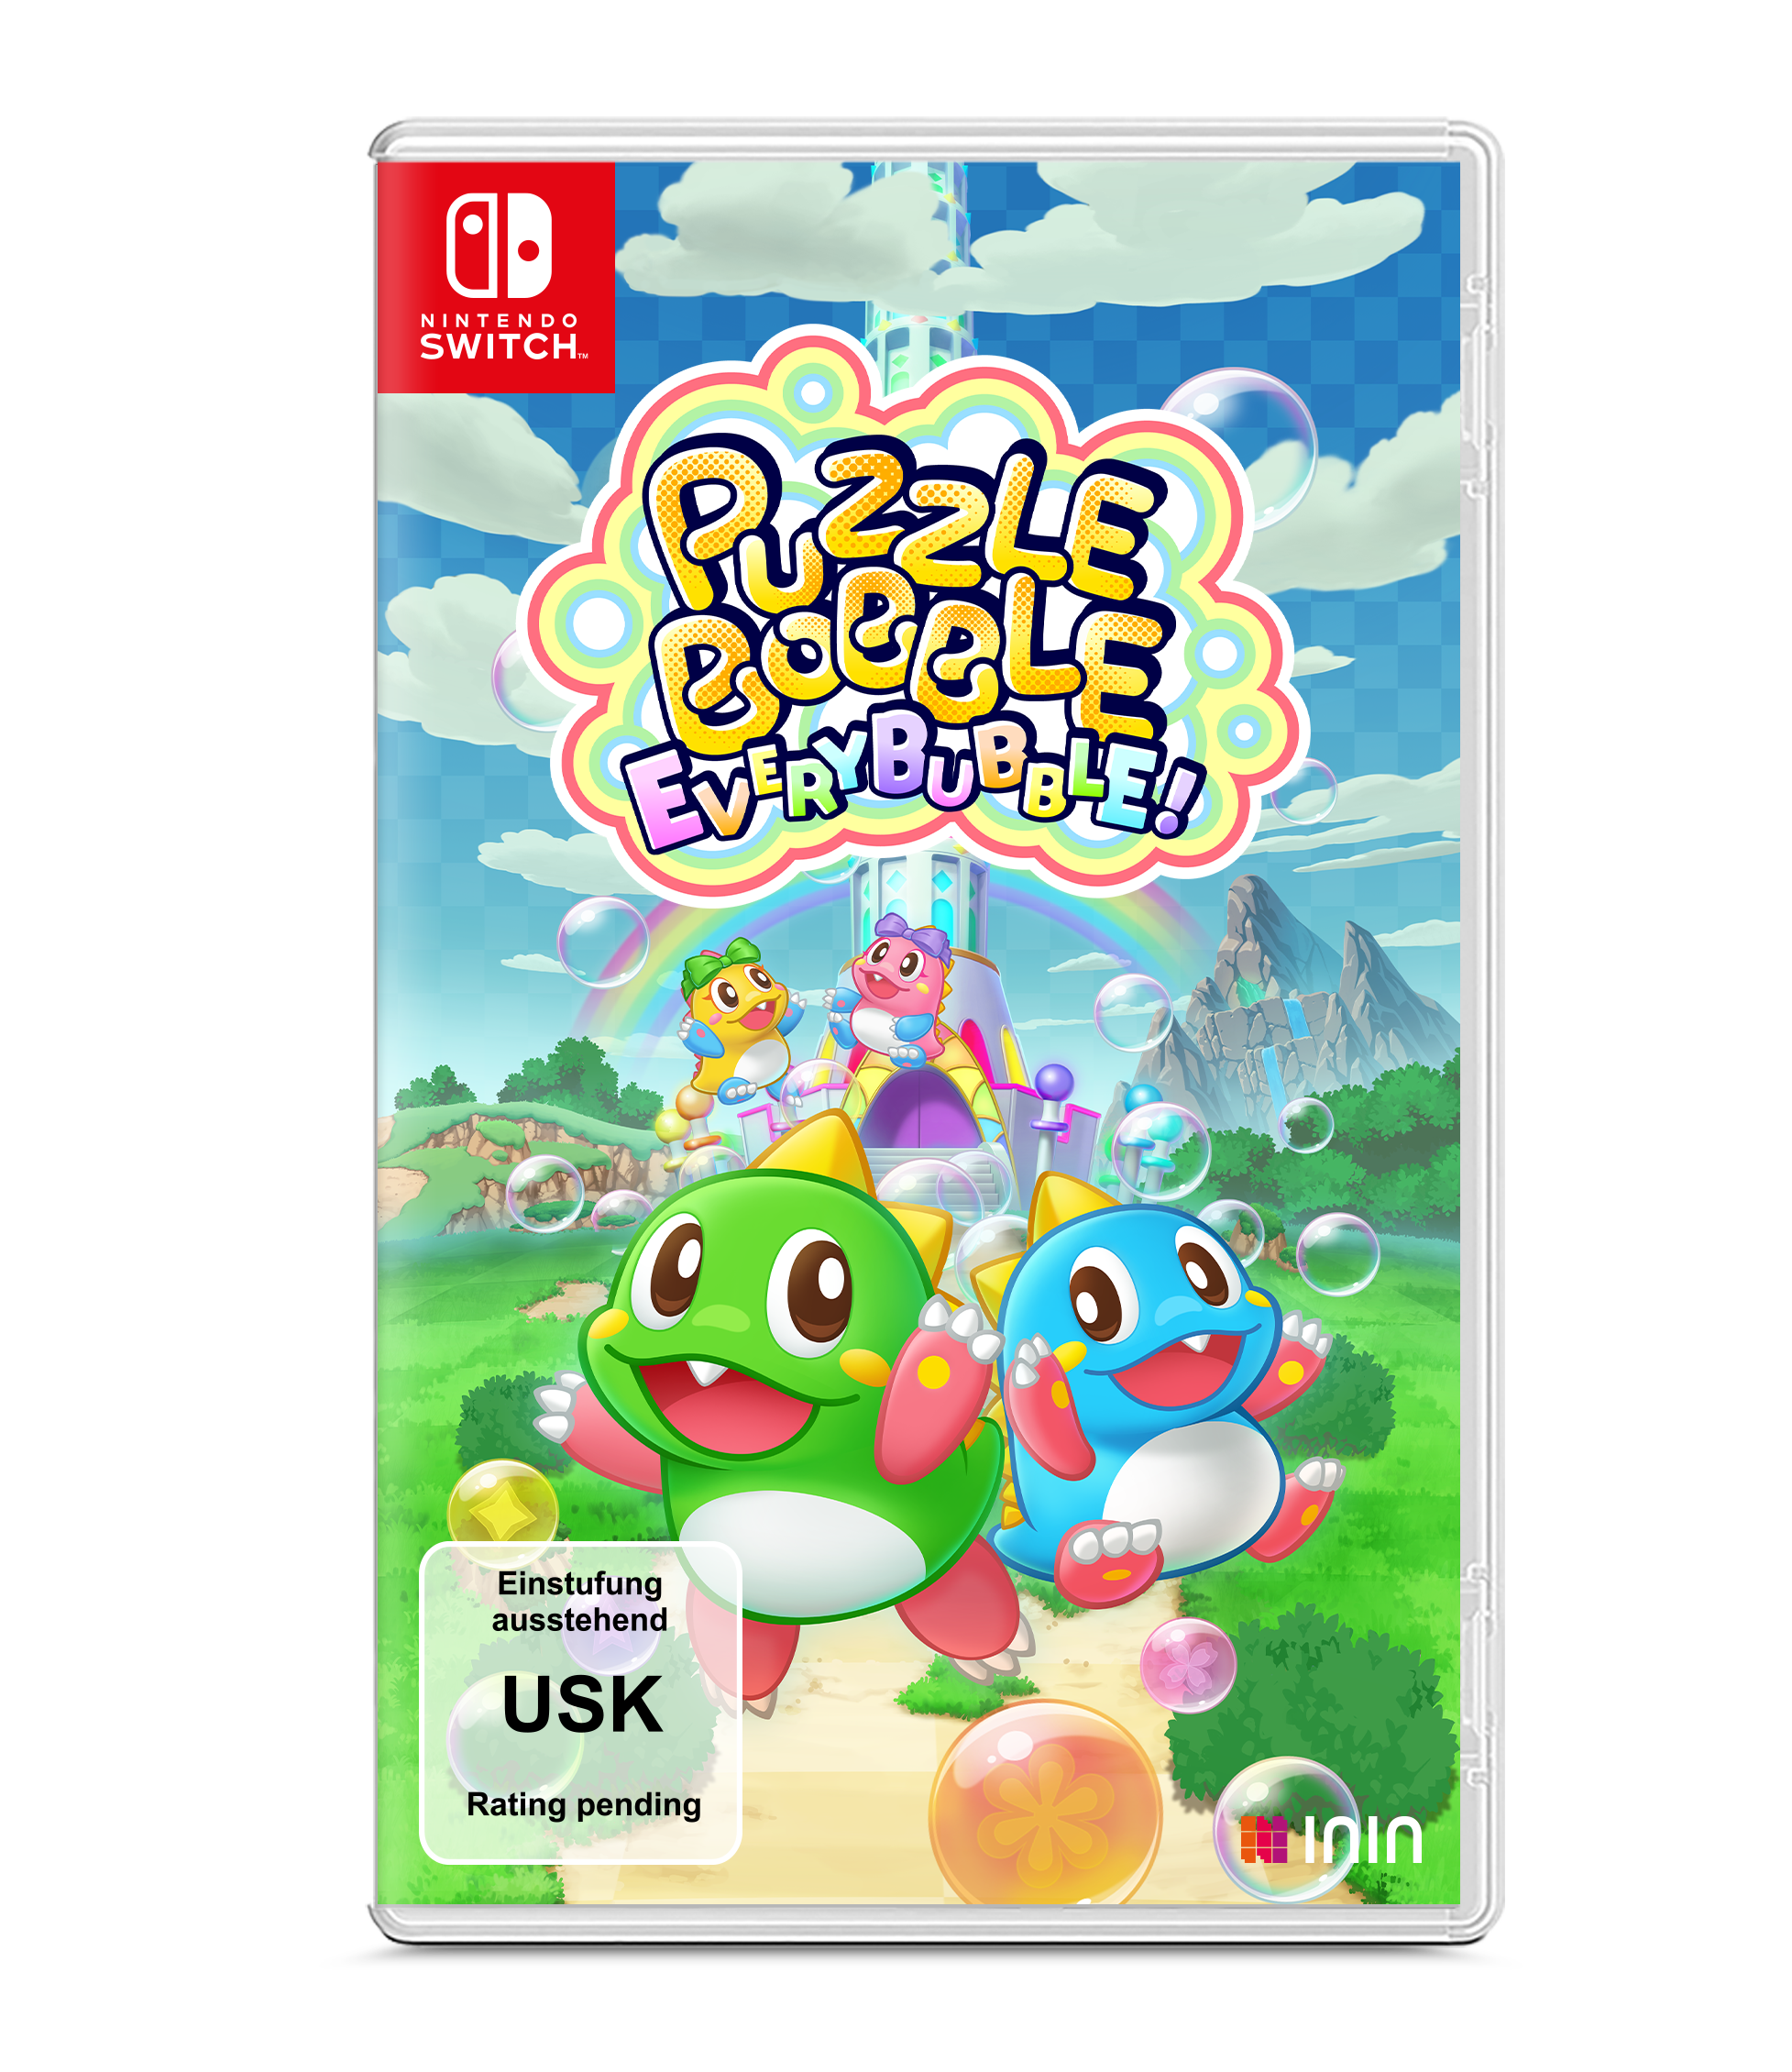 Switch] Everybubble! [Nintendo Bobble Puzzle -